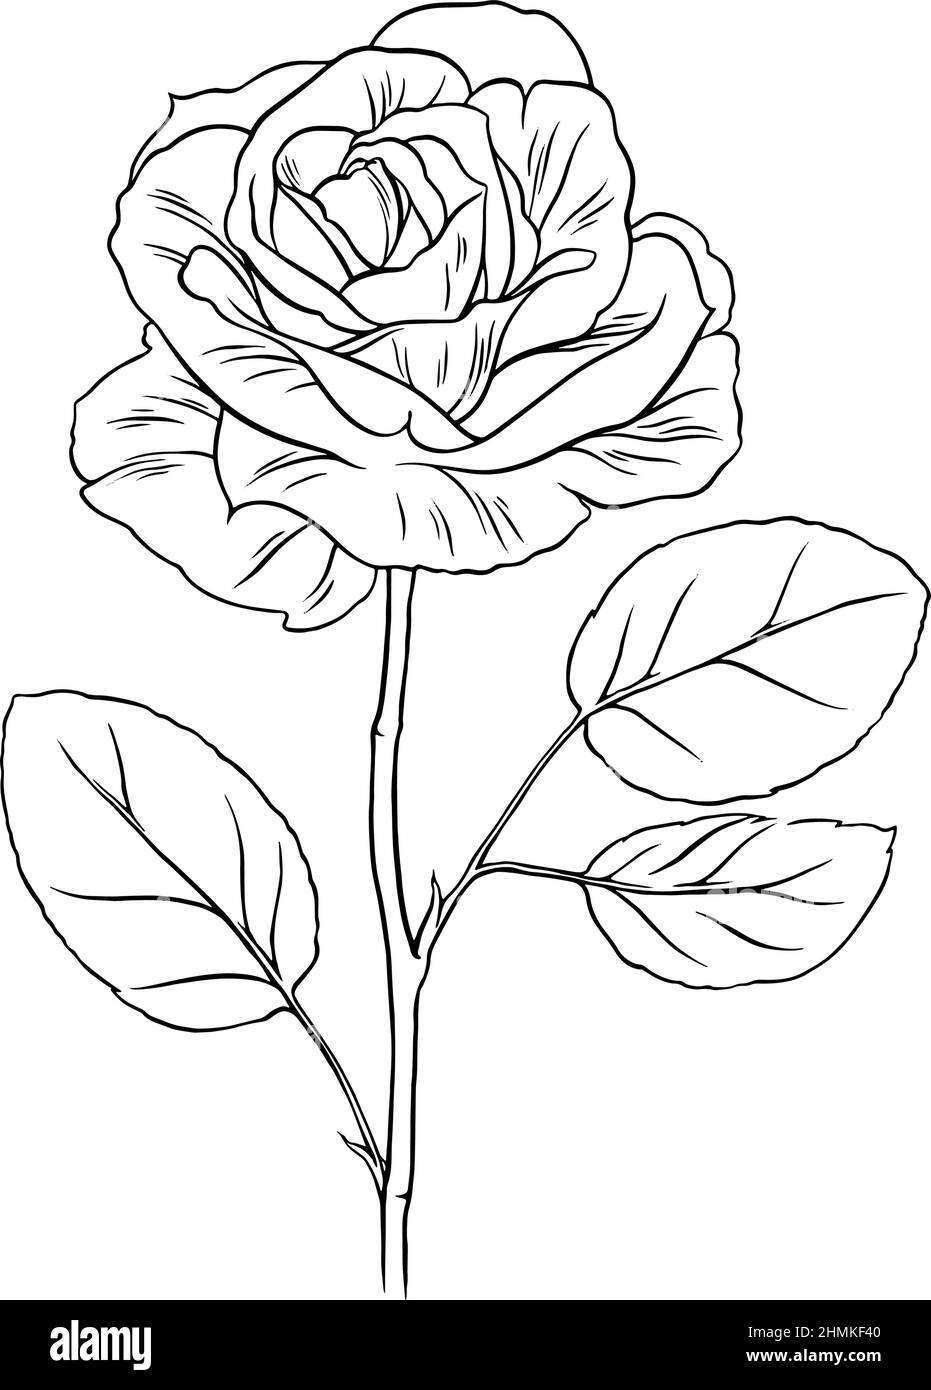 Beautiful rose flower line art sketch illustration Stock Vector ...